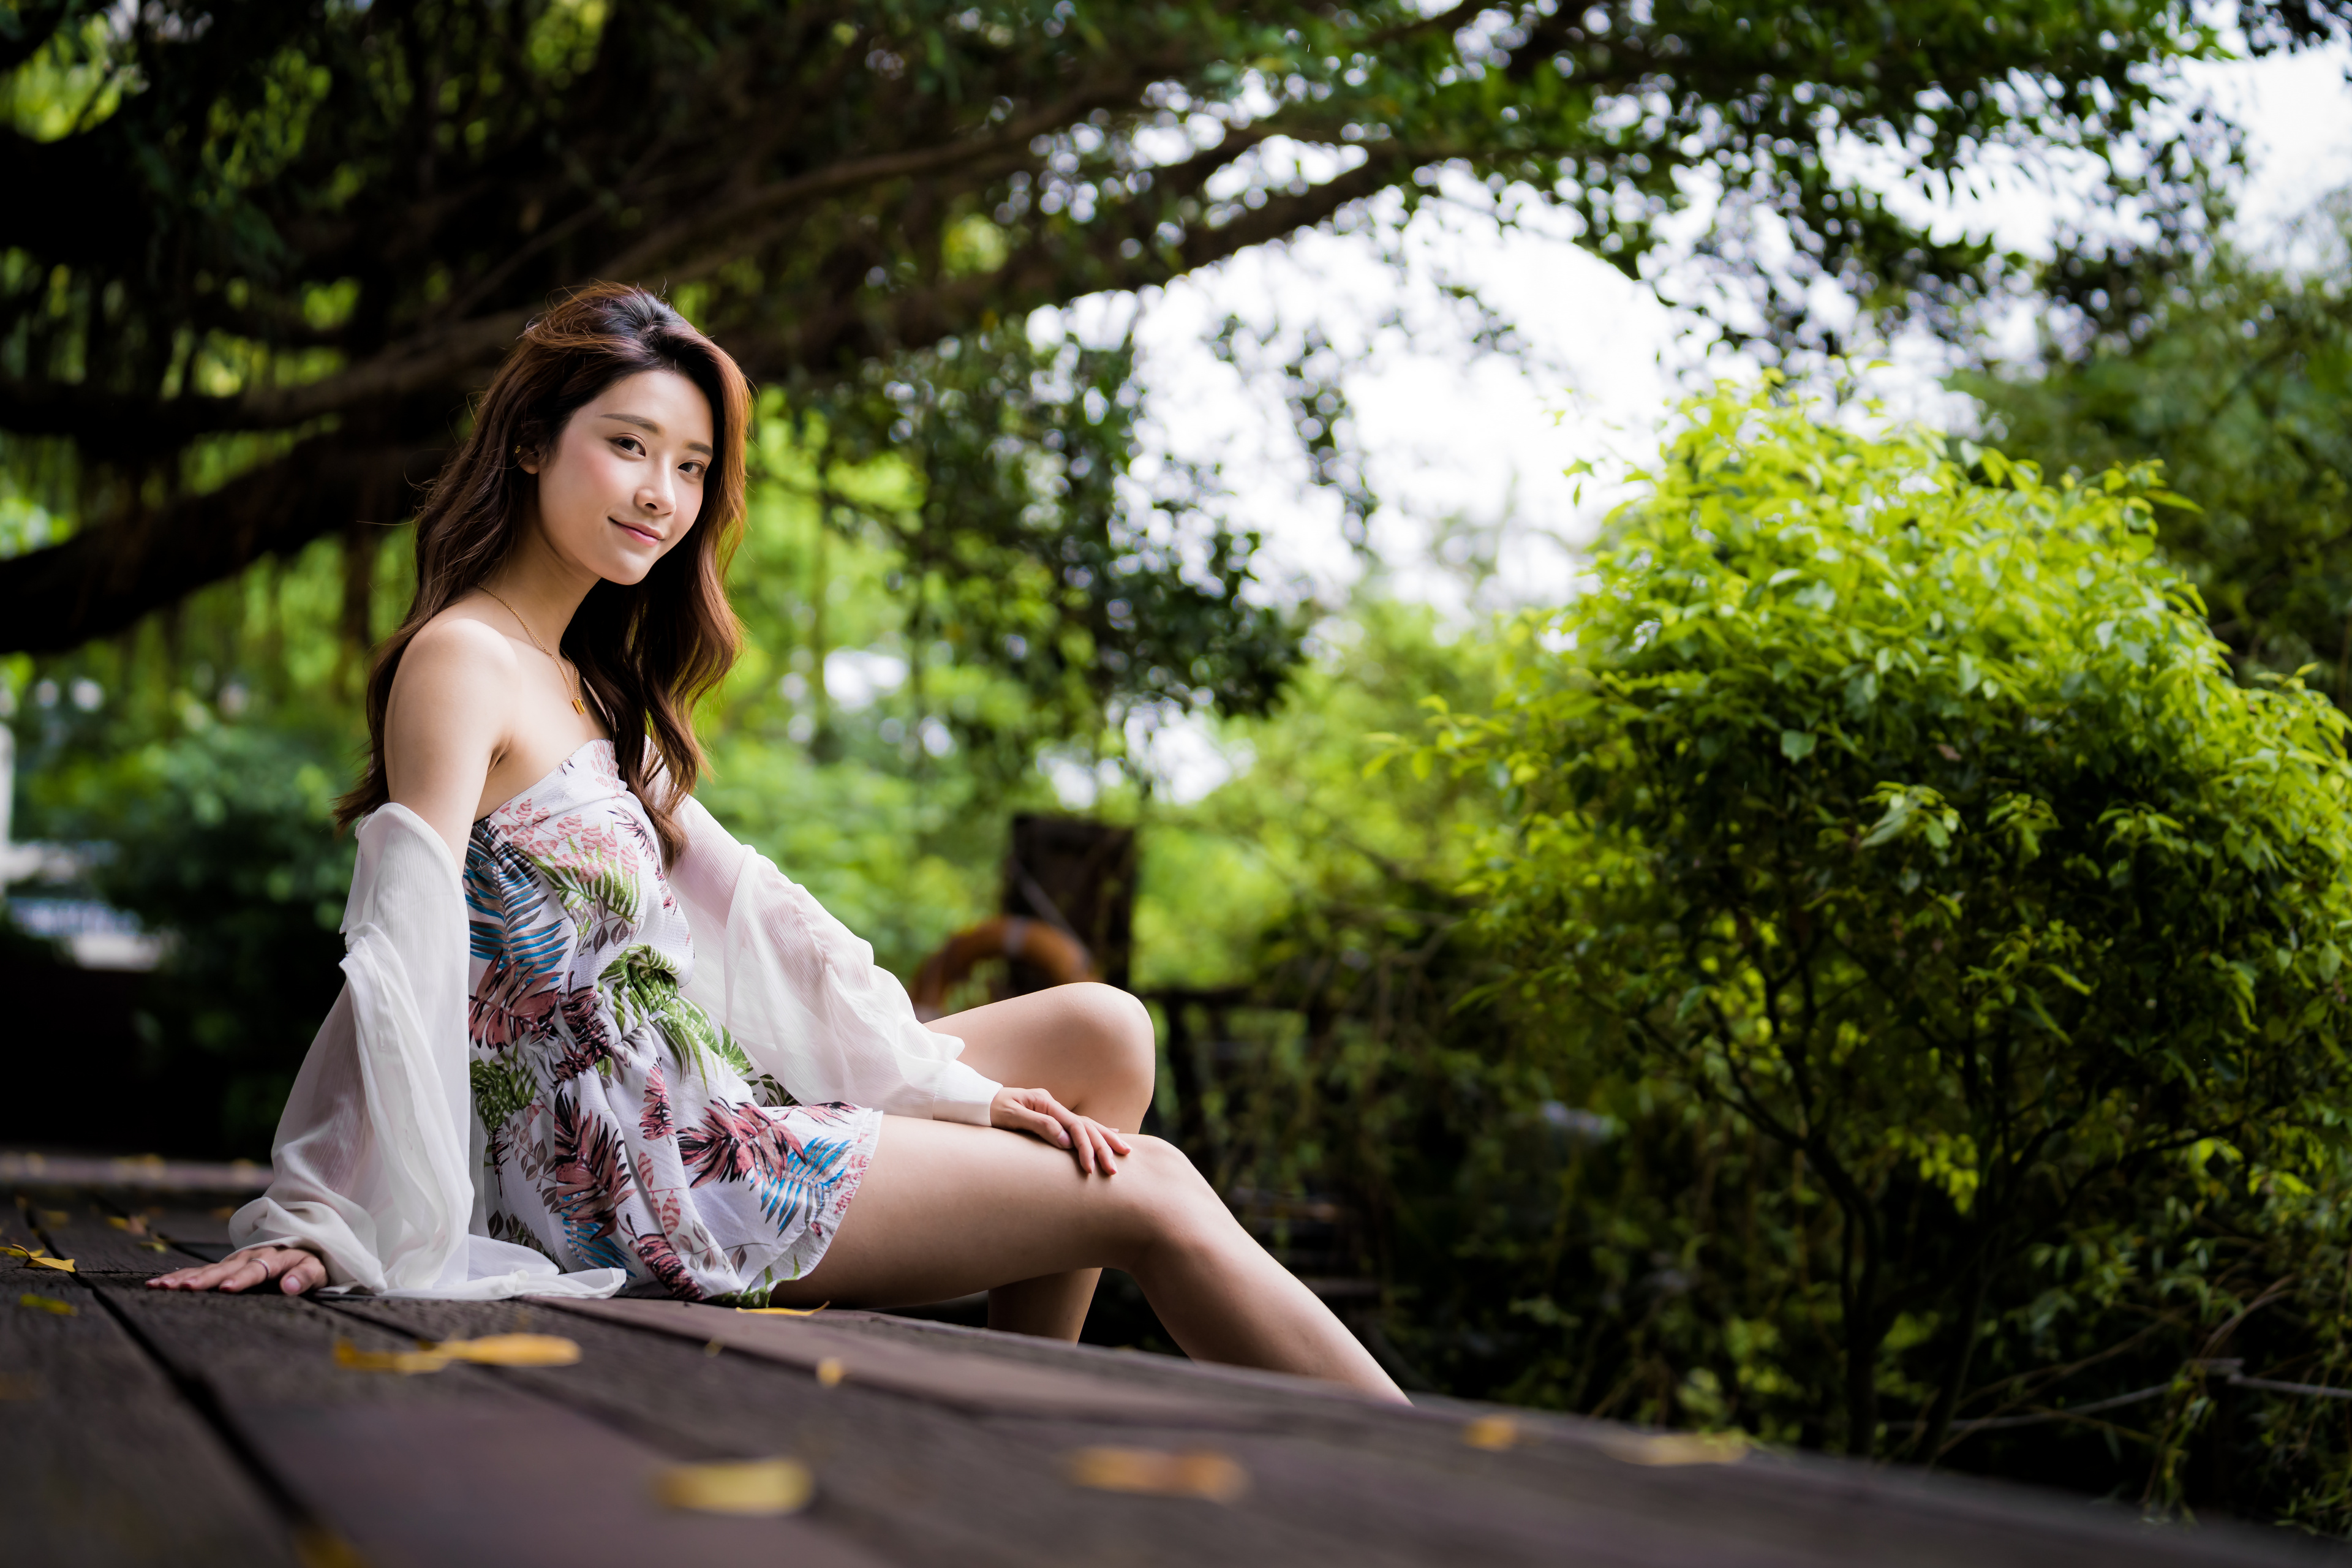 Asian Model Women Women Outdoors Dark Hair Long Hair Depth Of Field Trees Bushes Sitting Bare Should 3840x2560